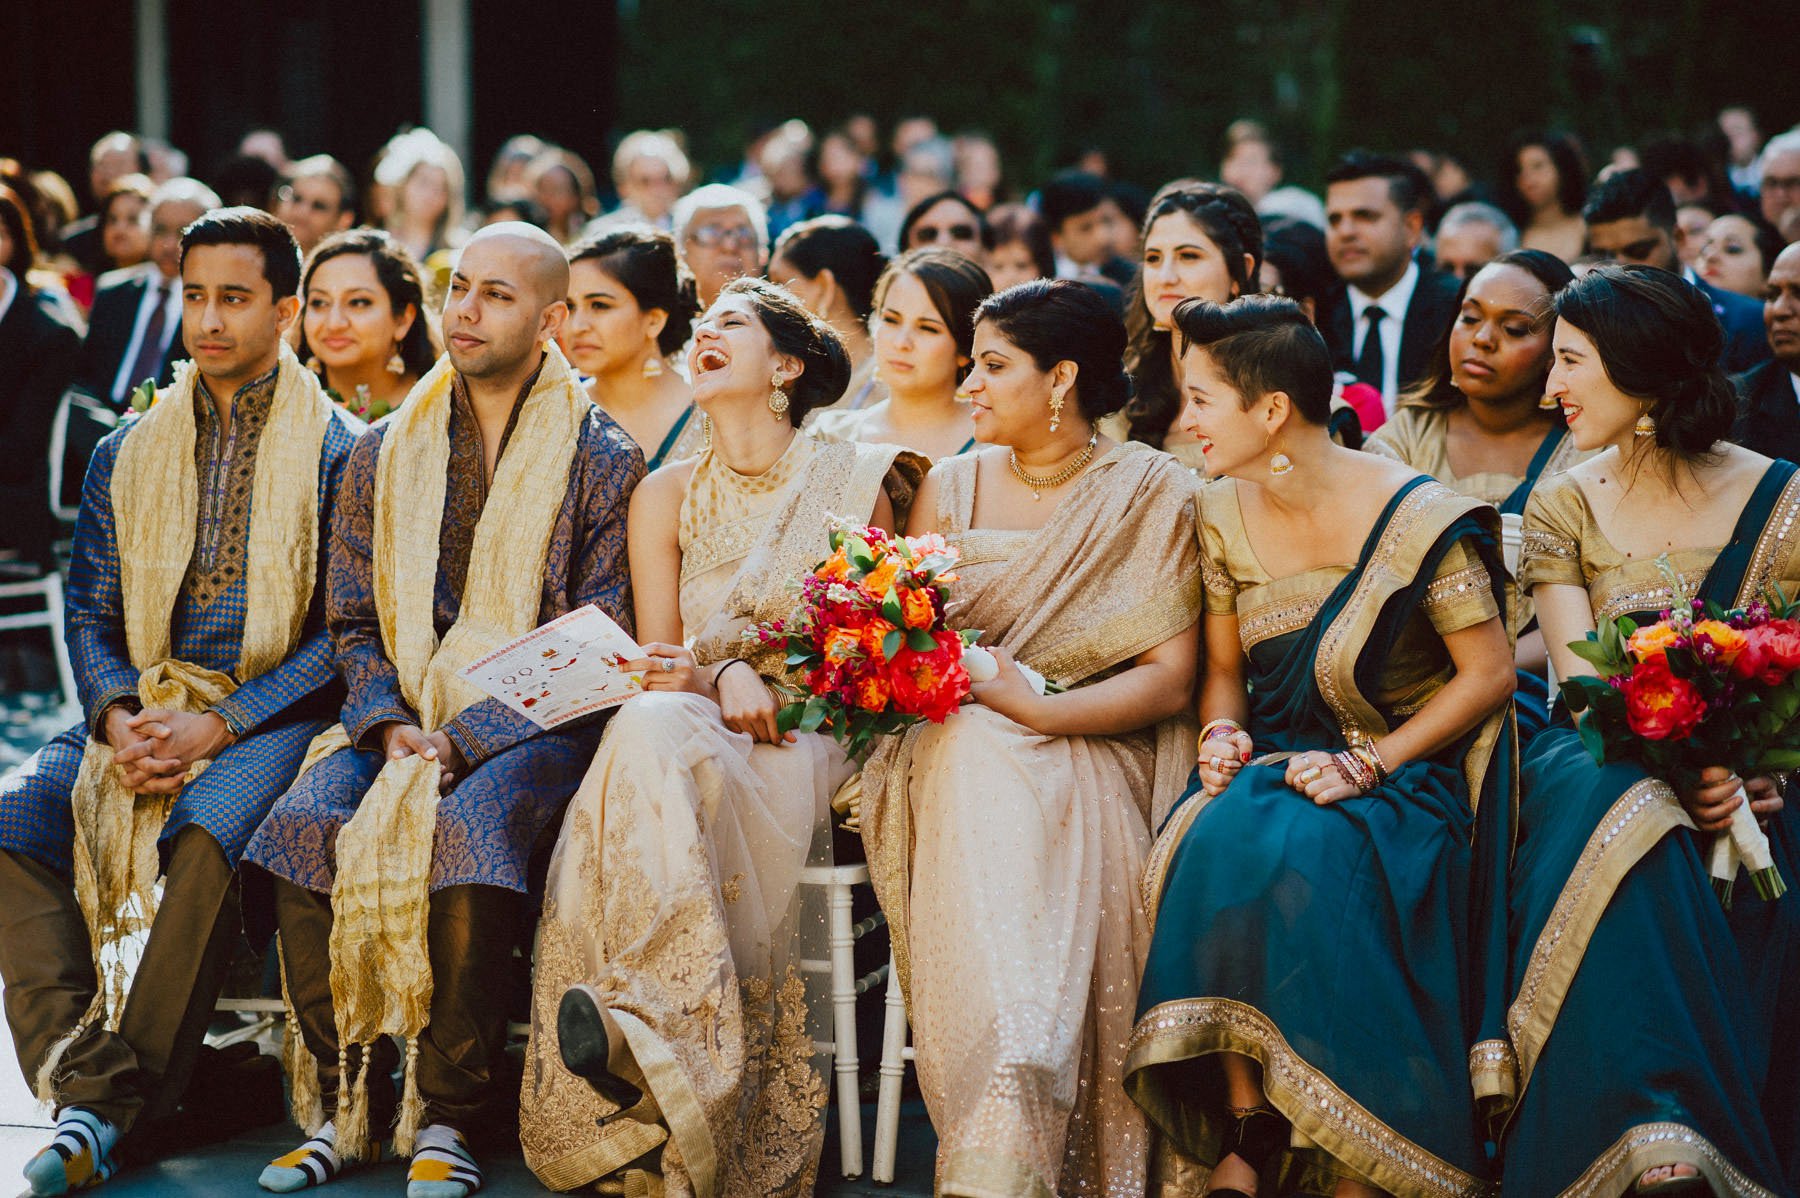 vie-philadelphia-indian-wedding-81.jpg